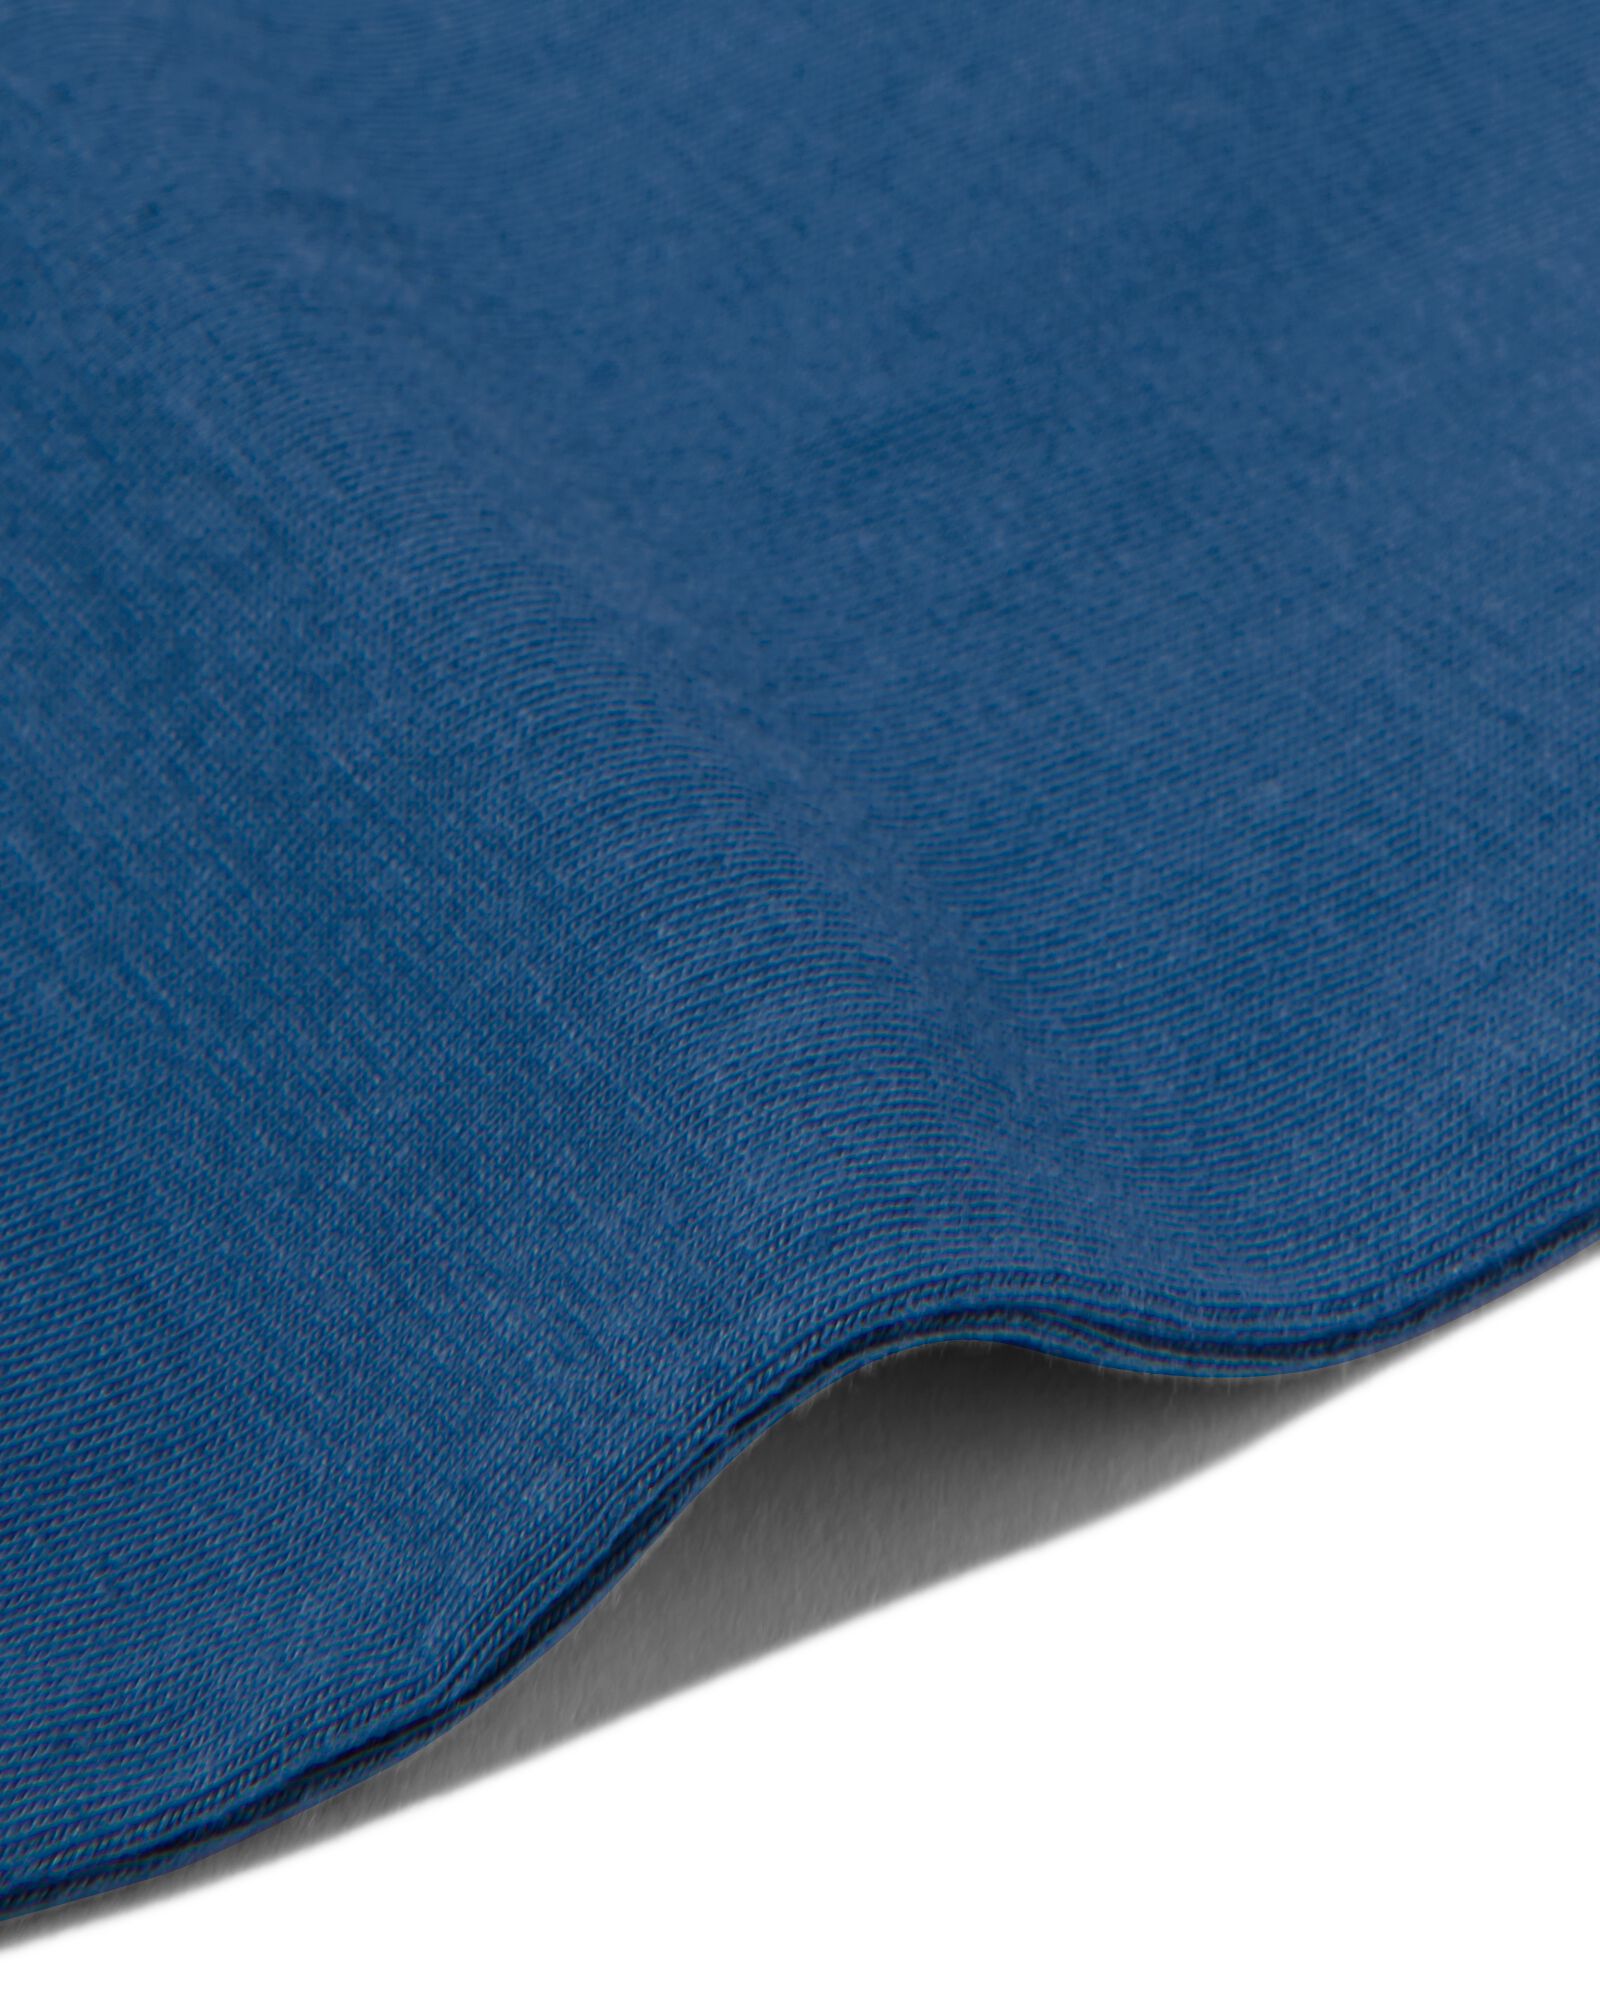 kinderhemden stretch katoen - 2 stuks donkerblauw - HEMA